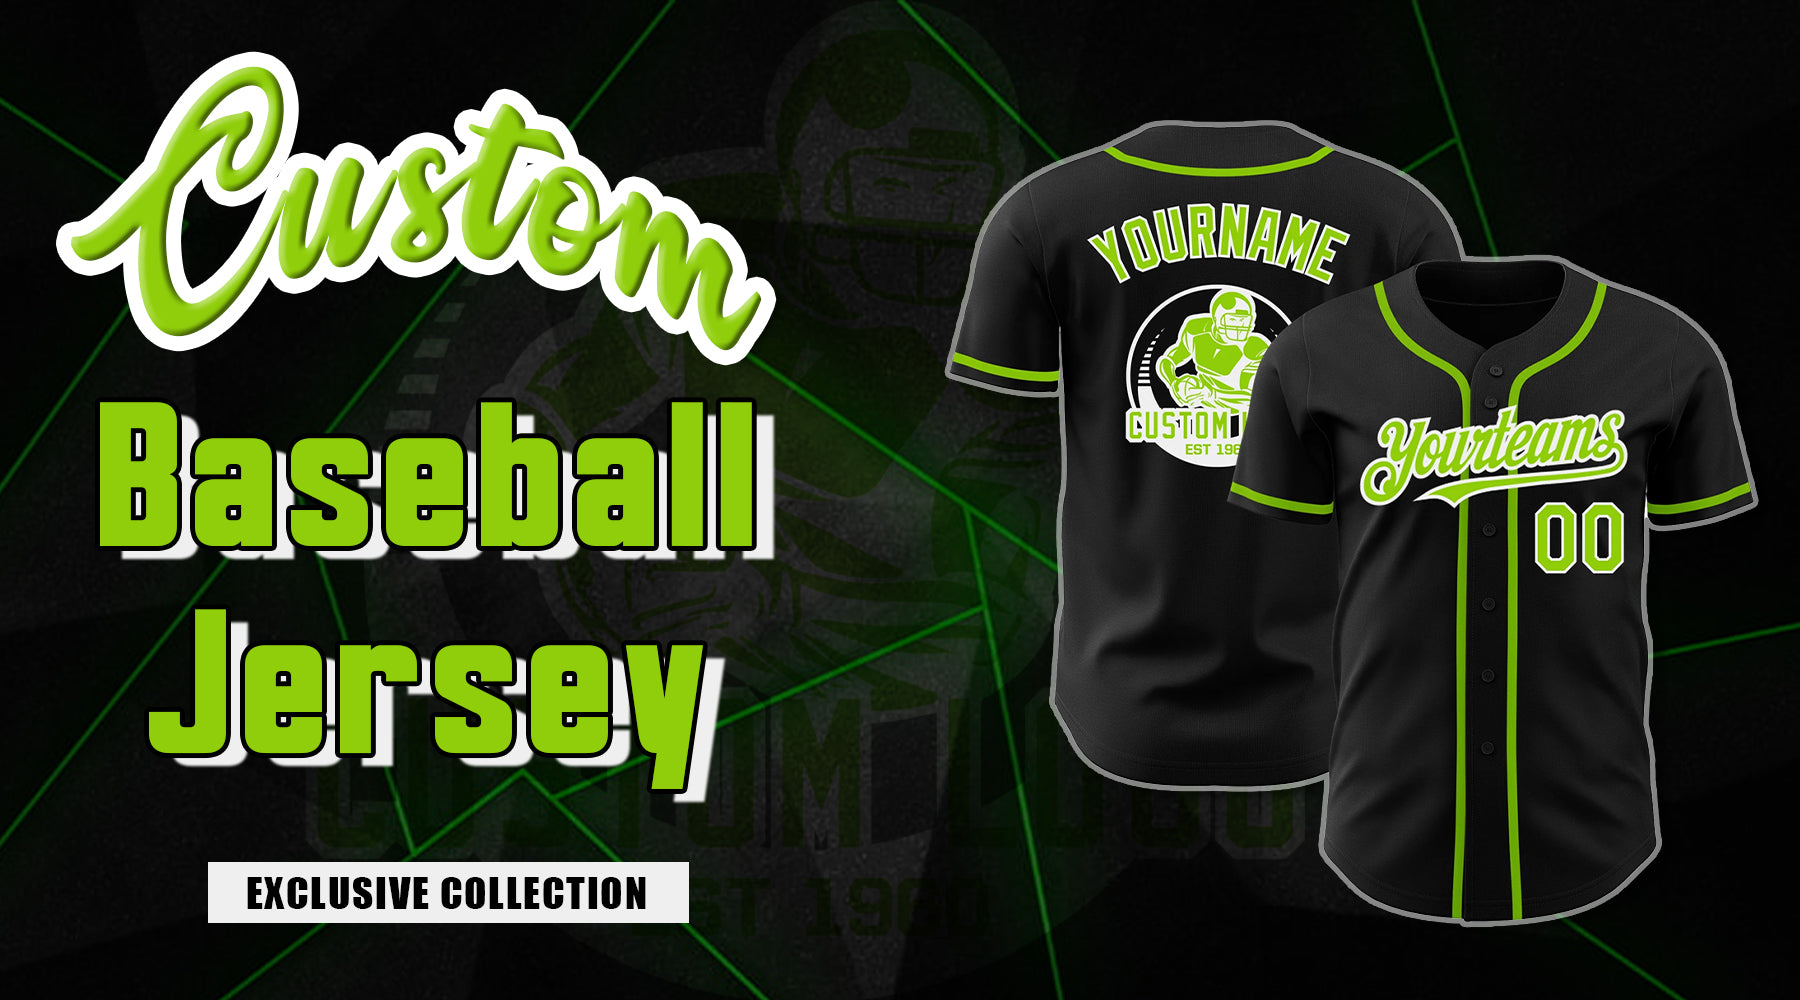 Custom Back Logo Baseball Jerseys  Pinstripe Uniforms Team Shirts